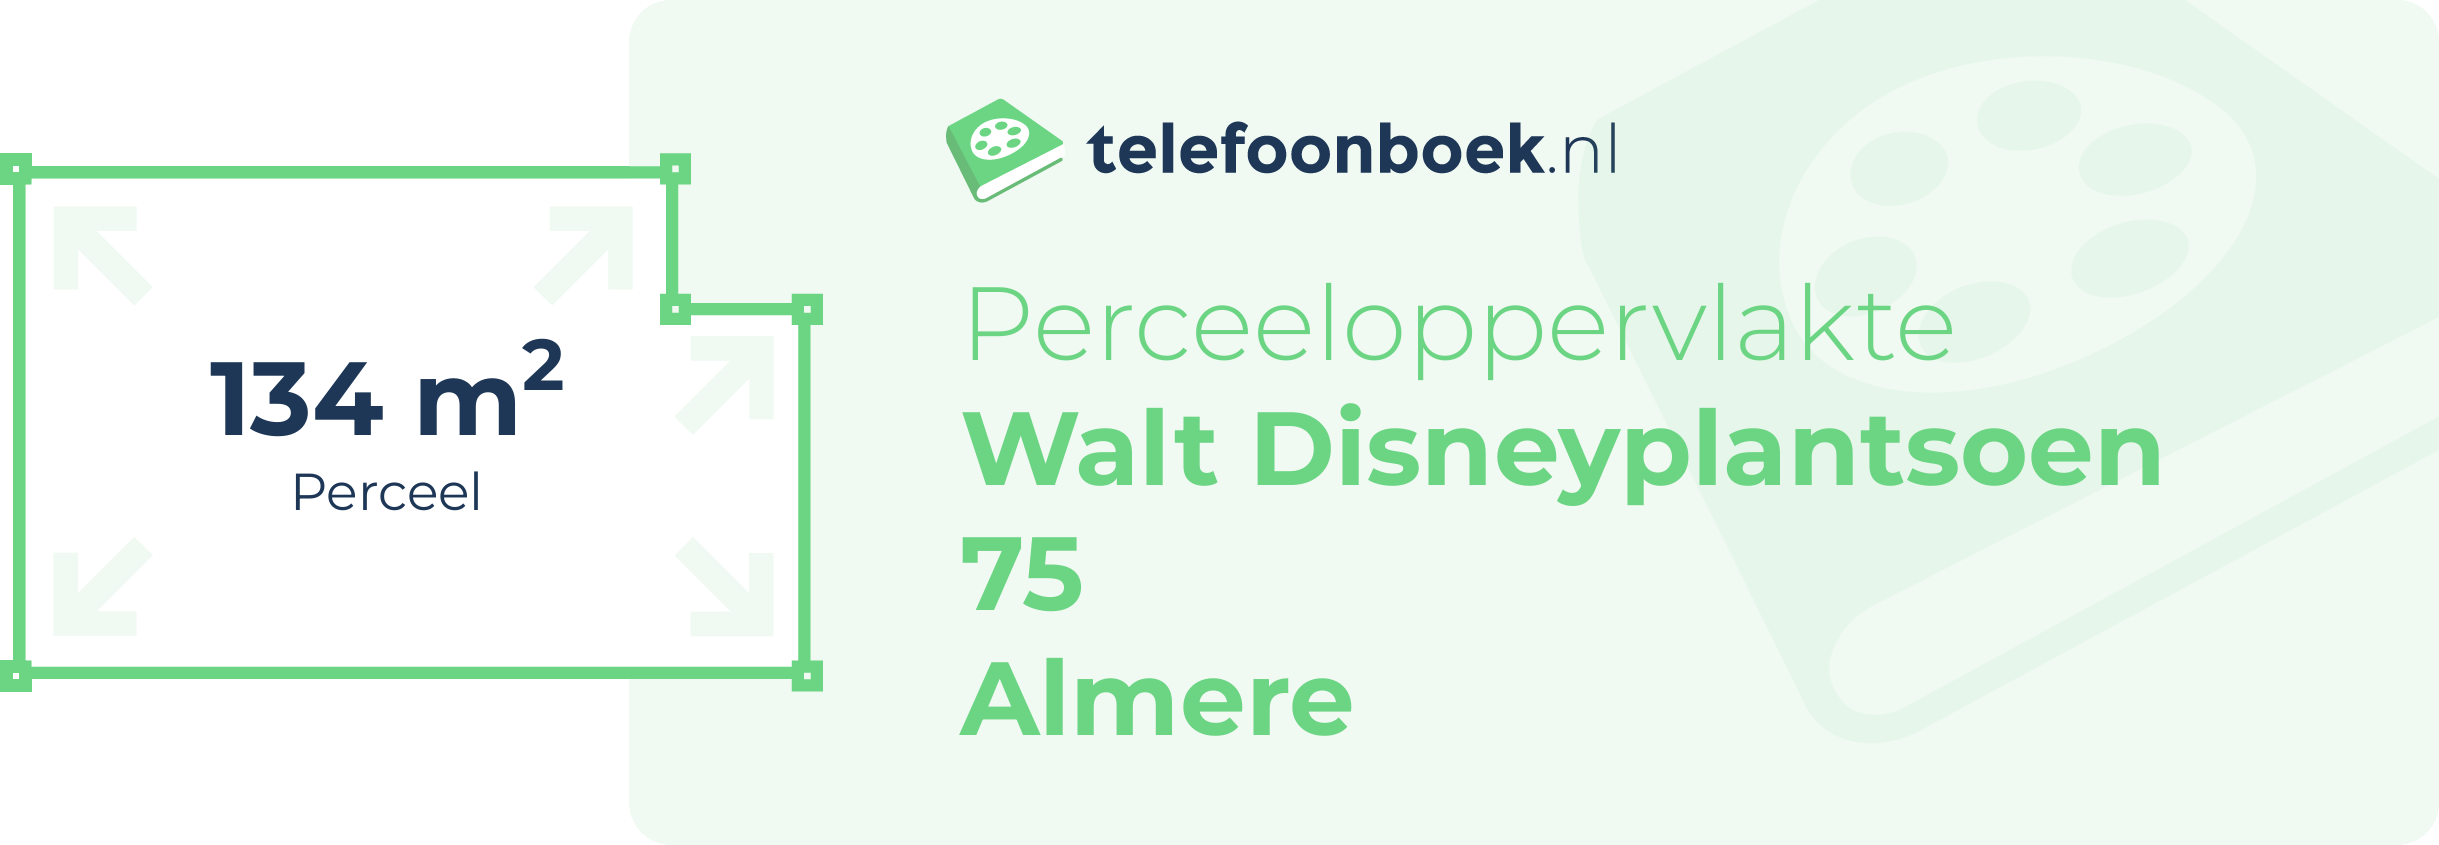 Perceeloppervlakte Walt Disneyplantsoen 75 Almere